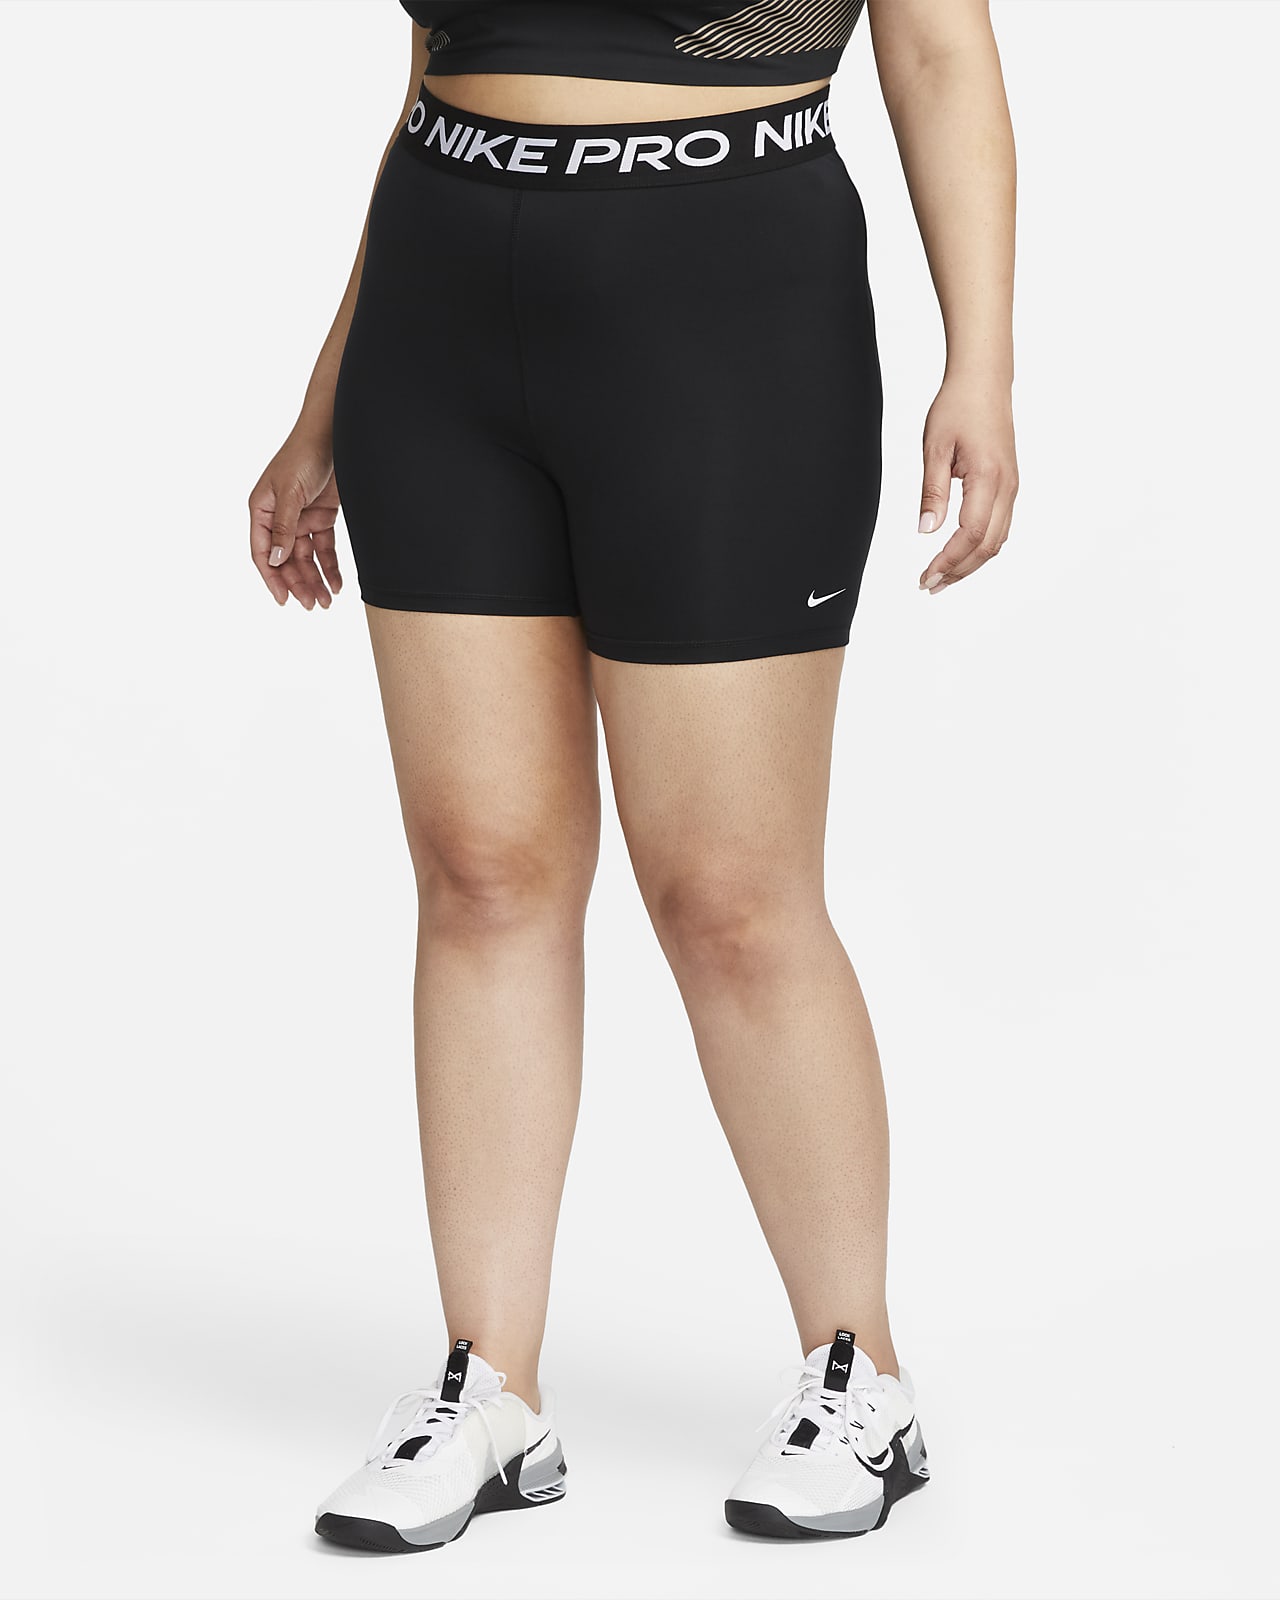 Nike Pro 365 Shorts Variety